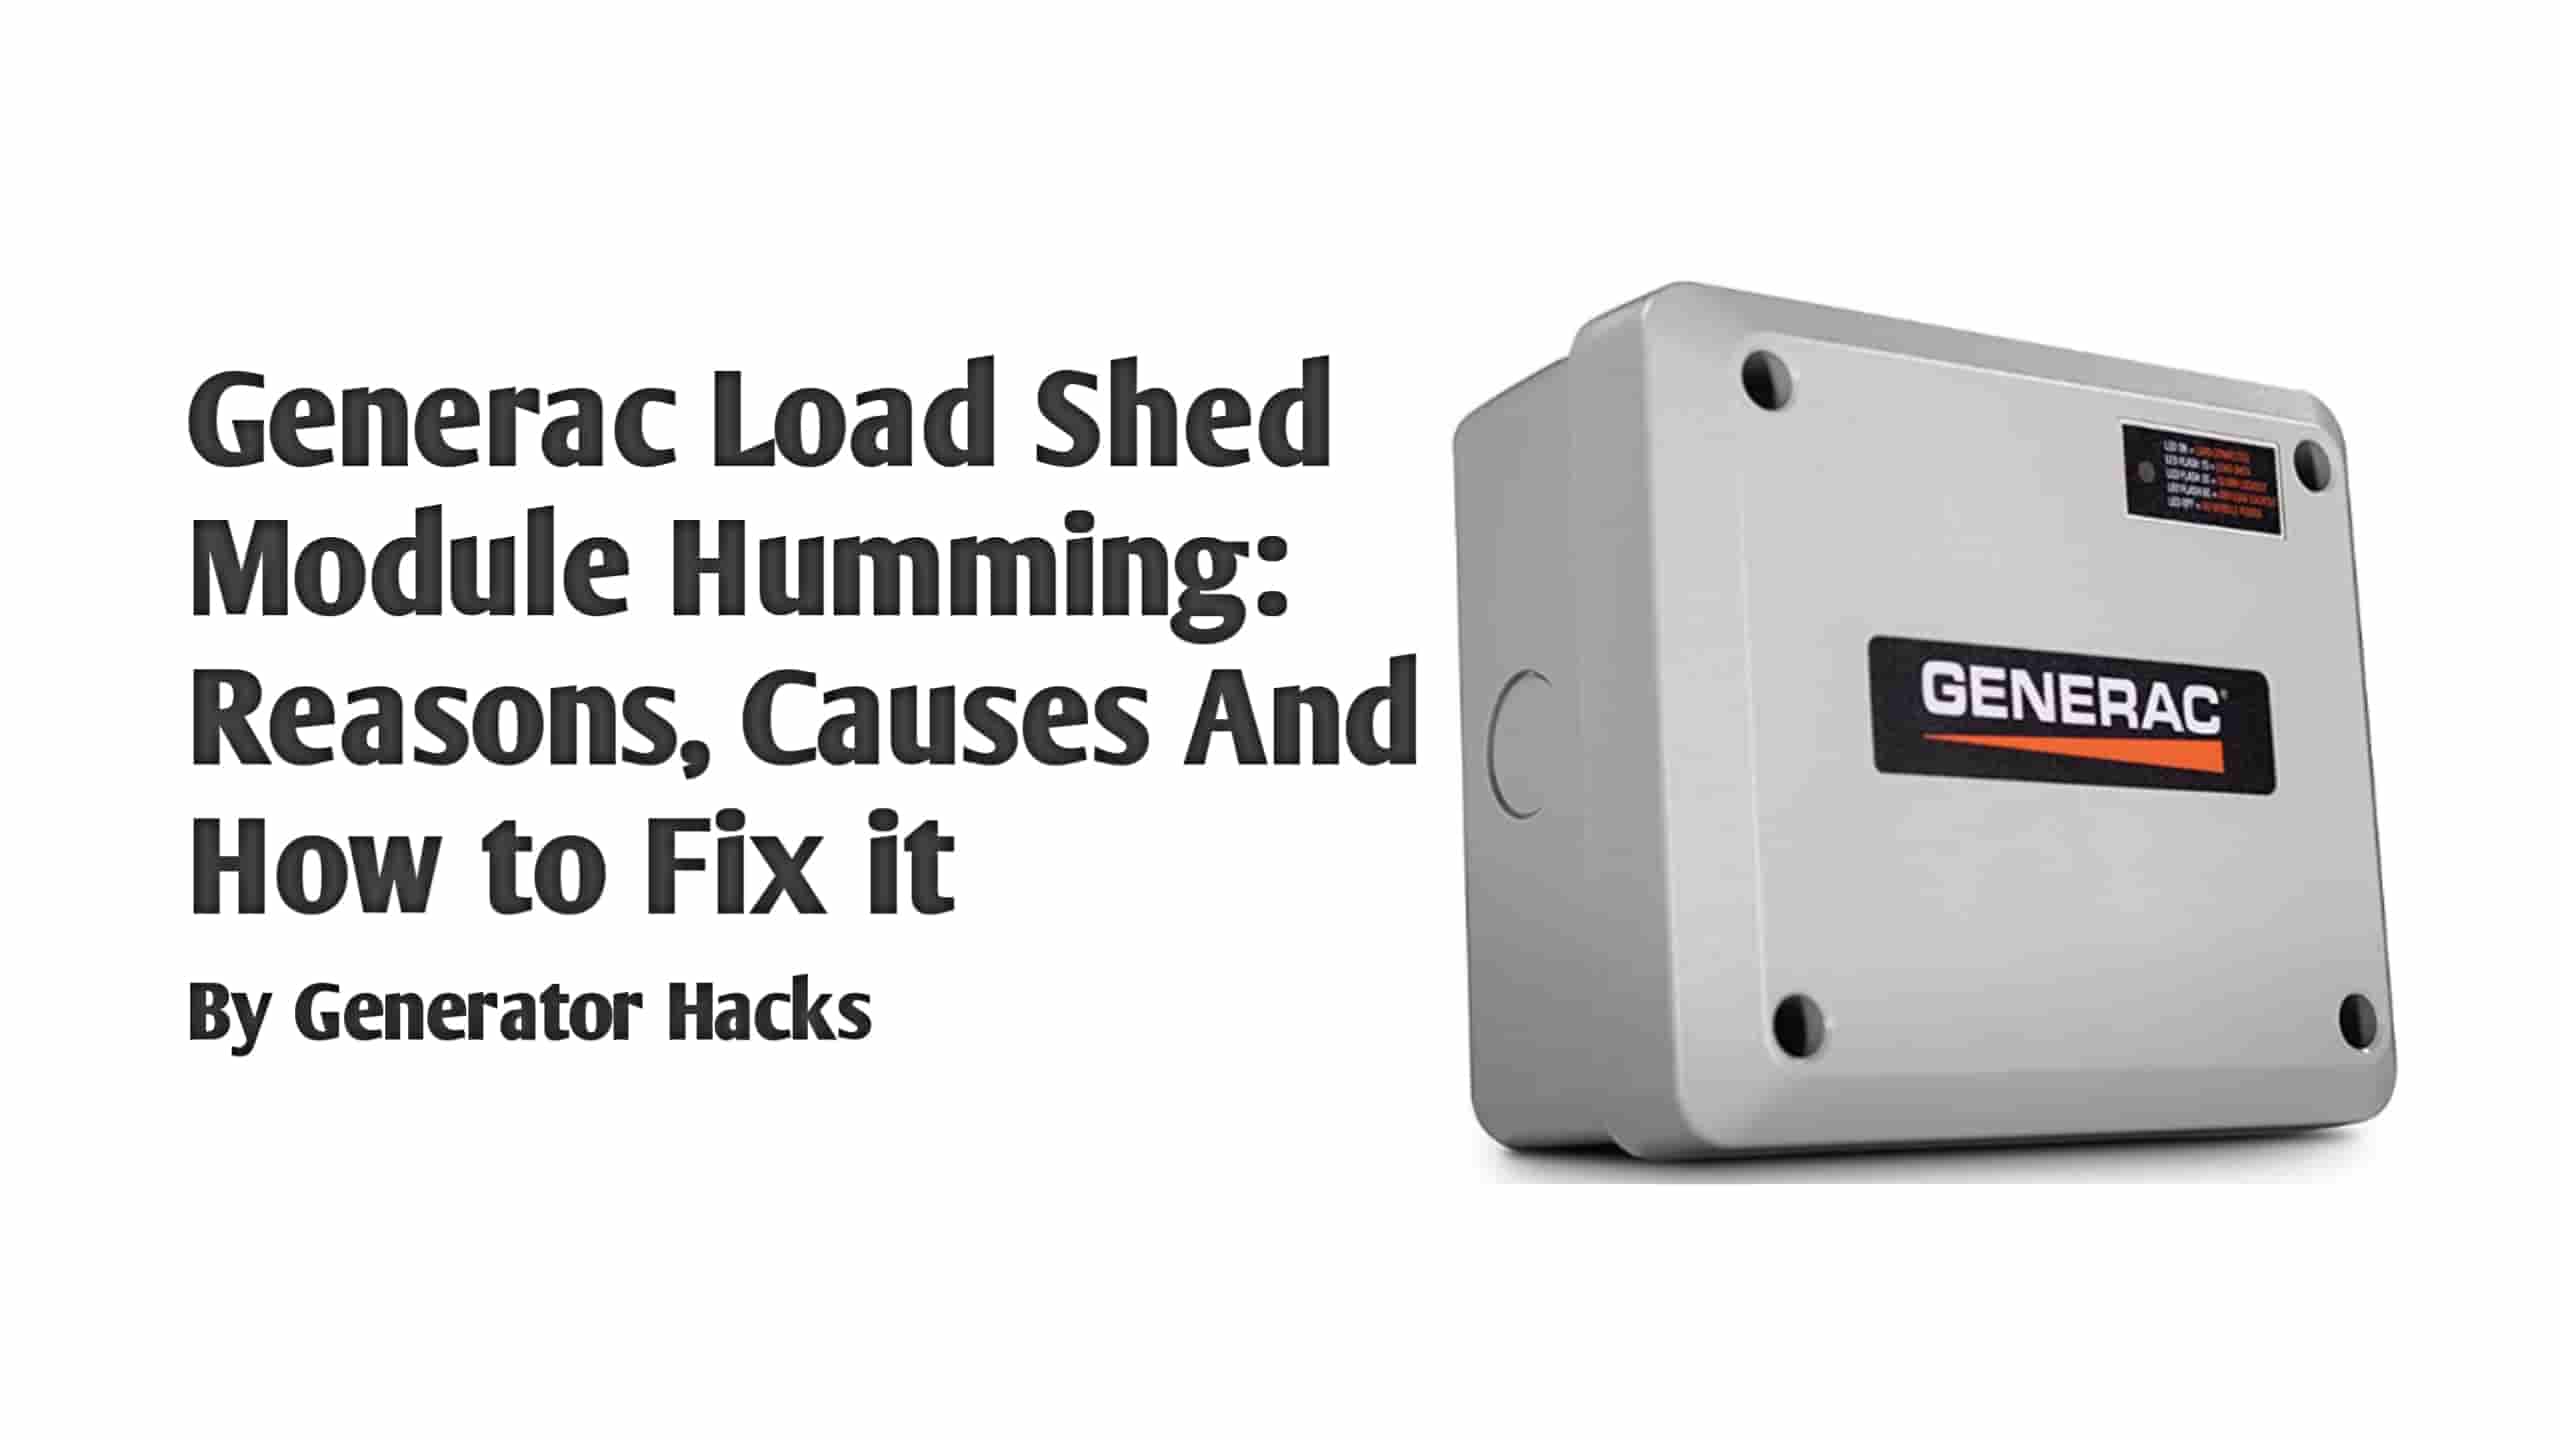 Generac load shed module humming,